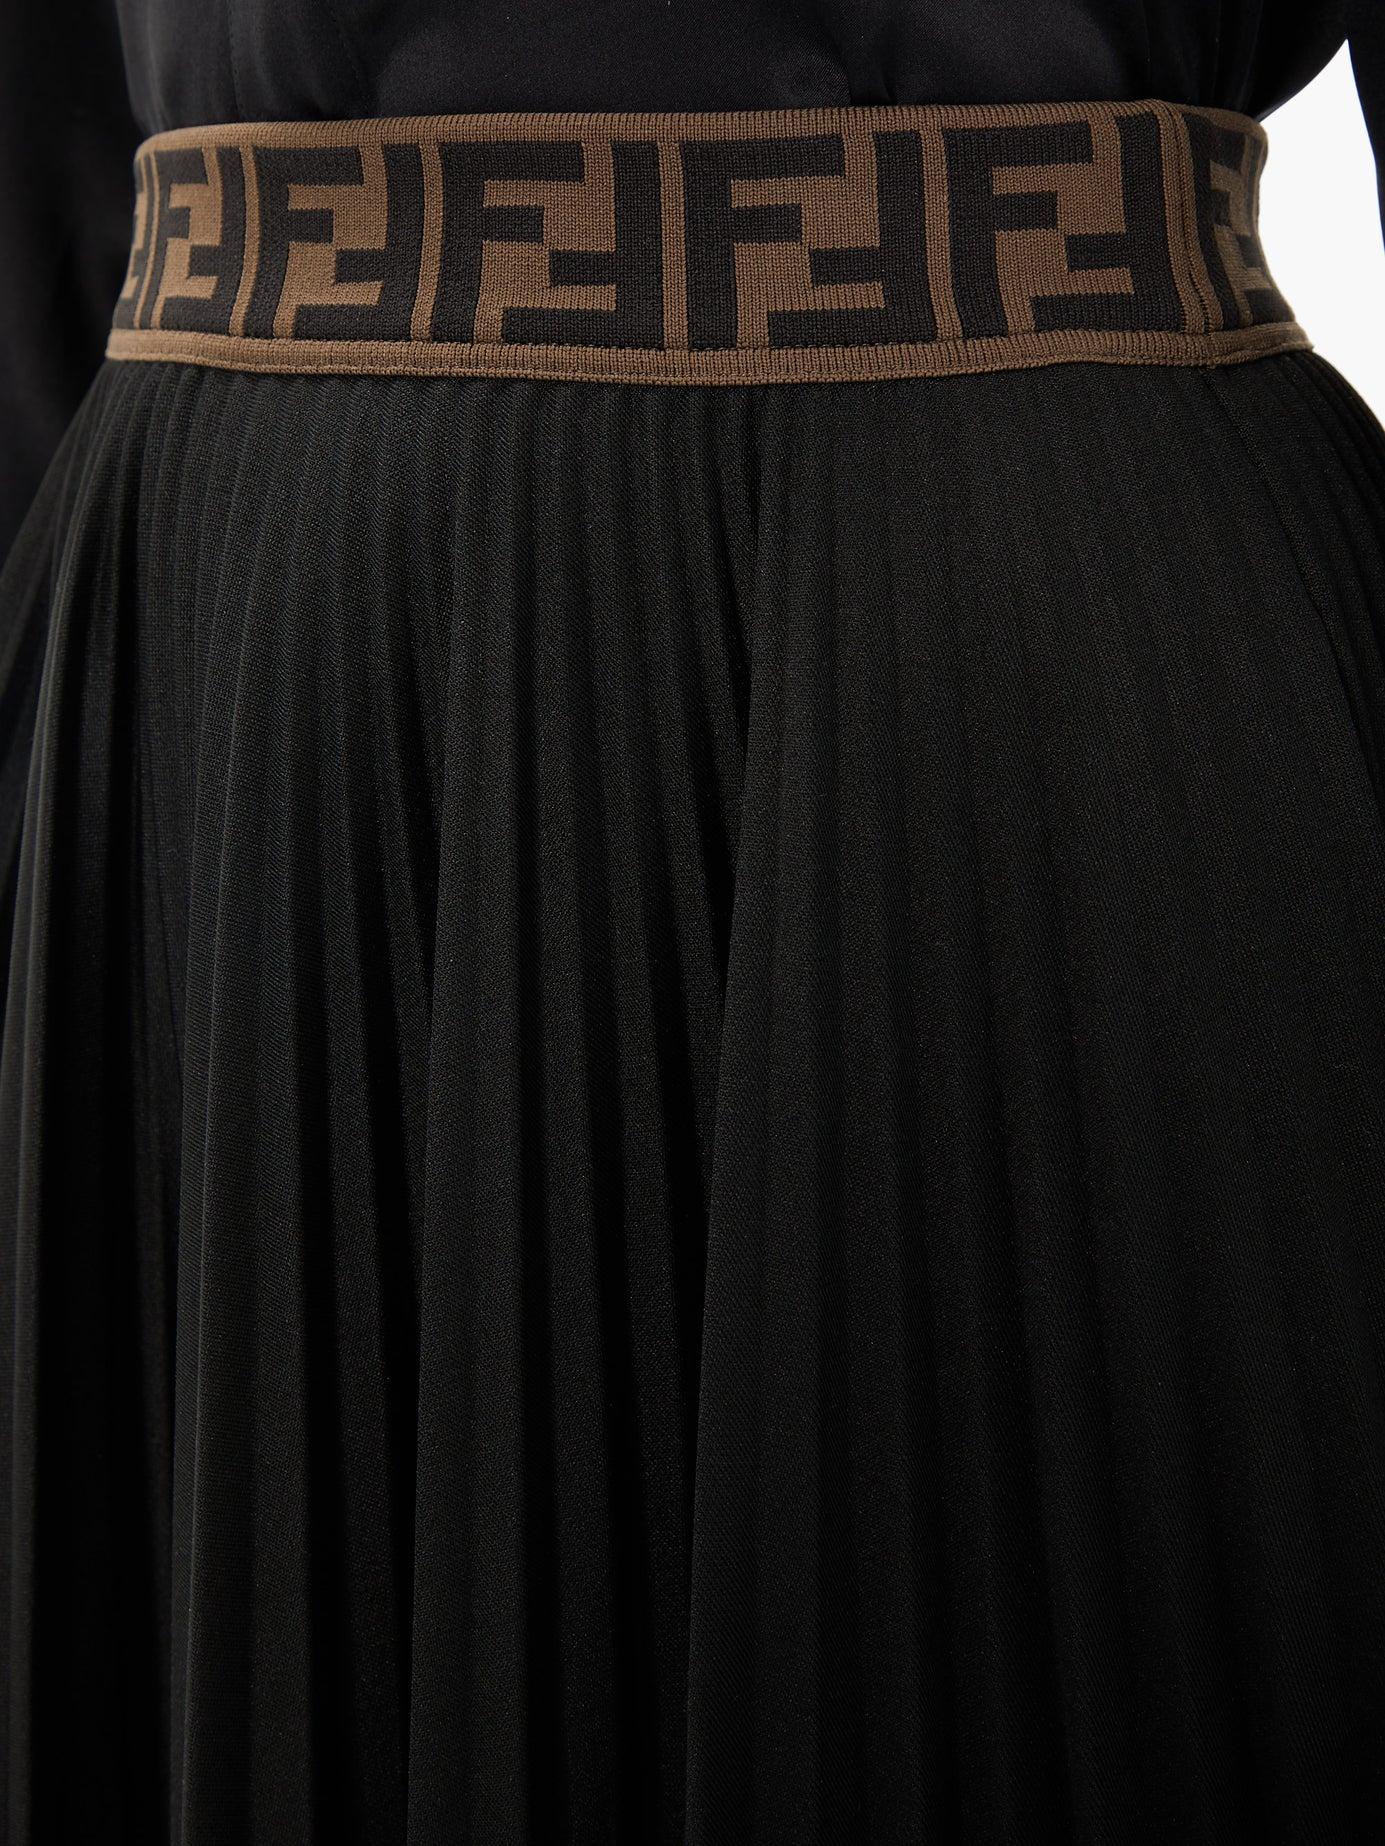 Fendi Cotton Ff Motif Pleated Skirt in Black | Lyst